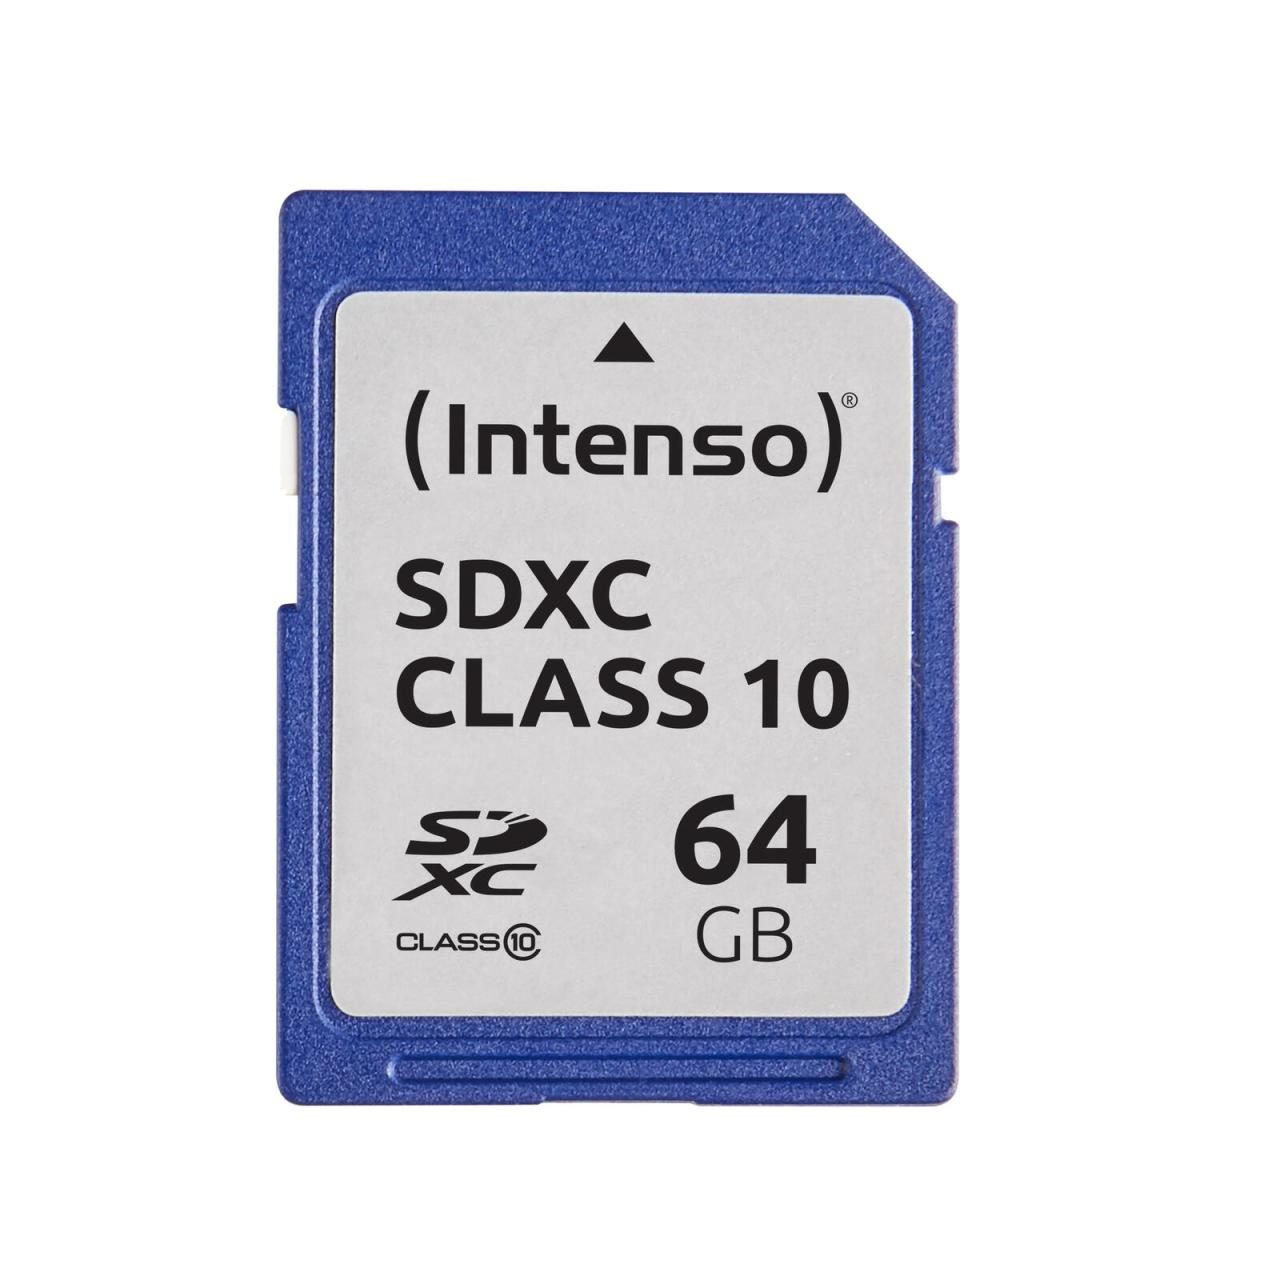 20 SDXC 64 GB, MB/s Intenso GB, - 64 Class Speicherkarte, INTENSO 10 SD-Speicherkarte